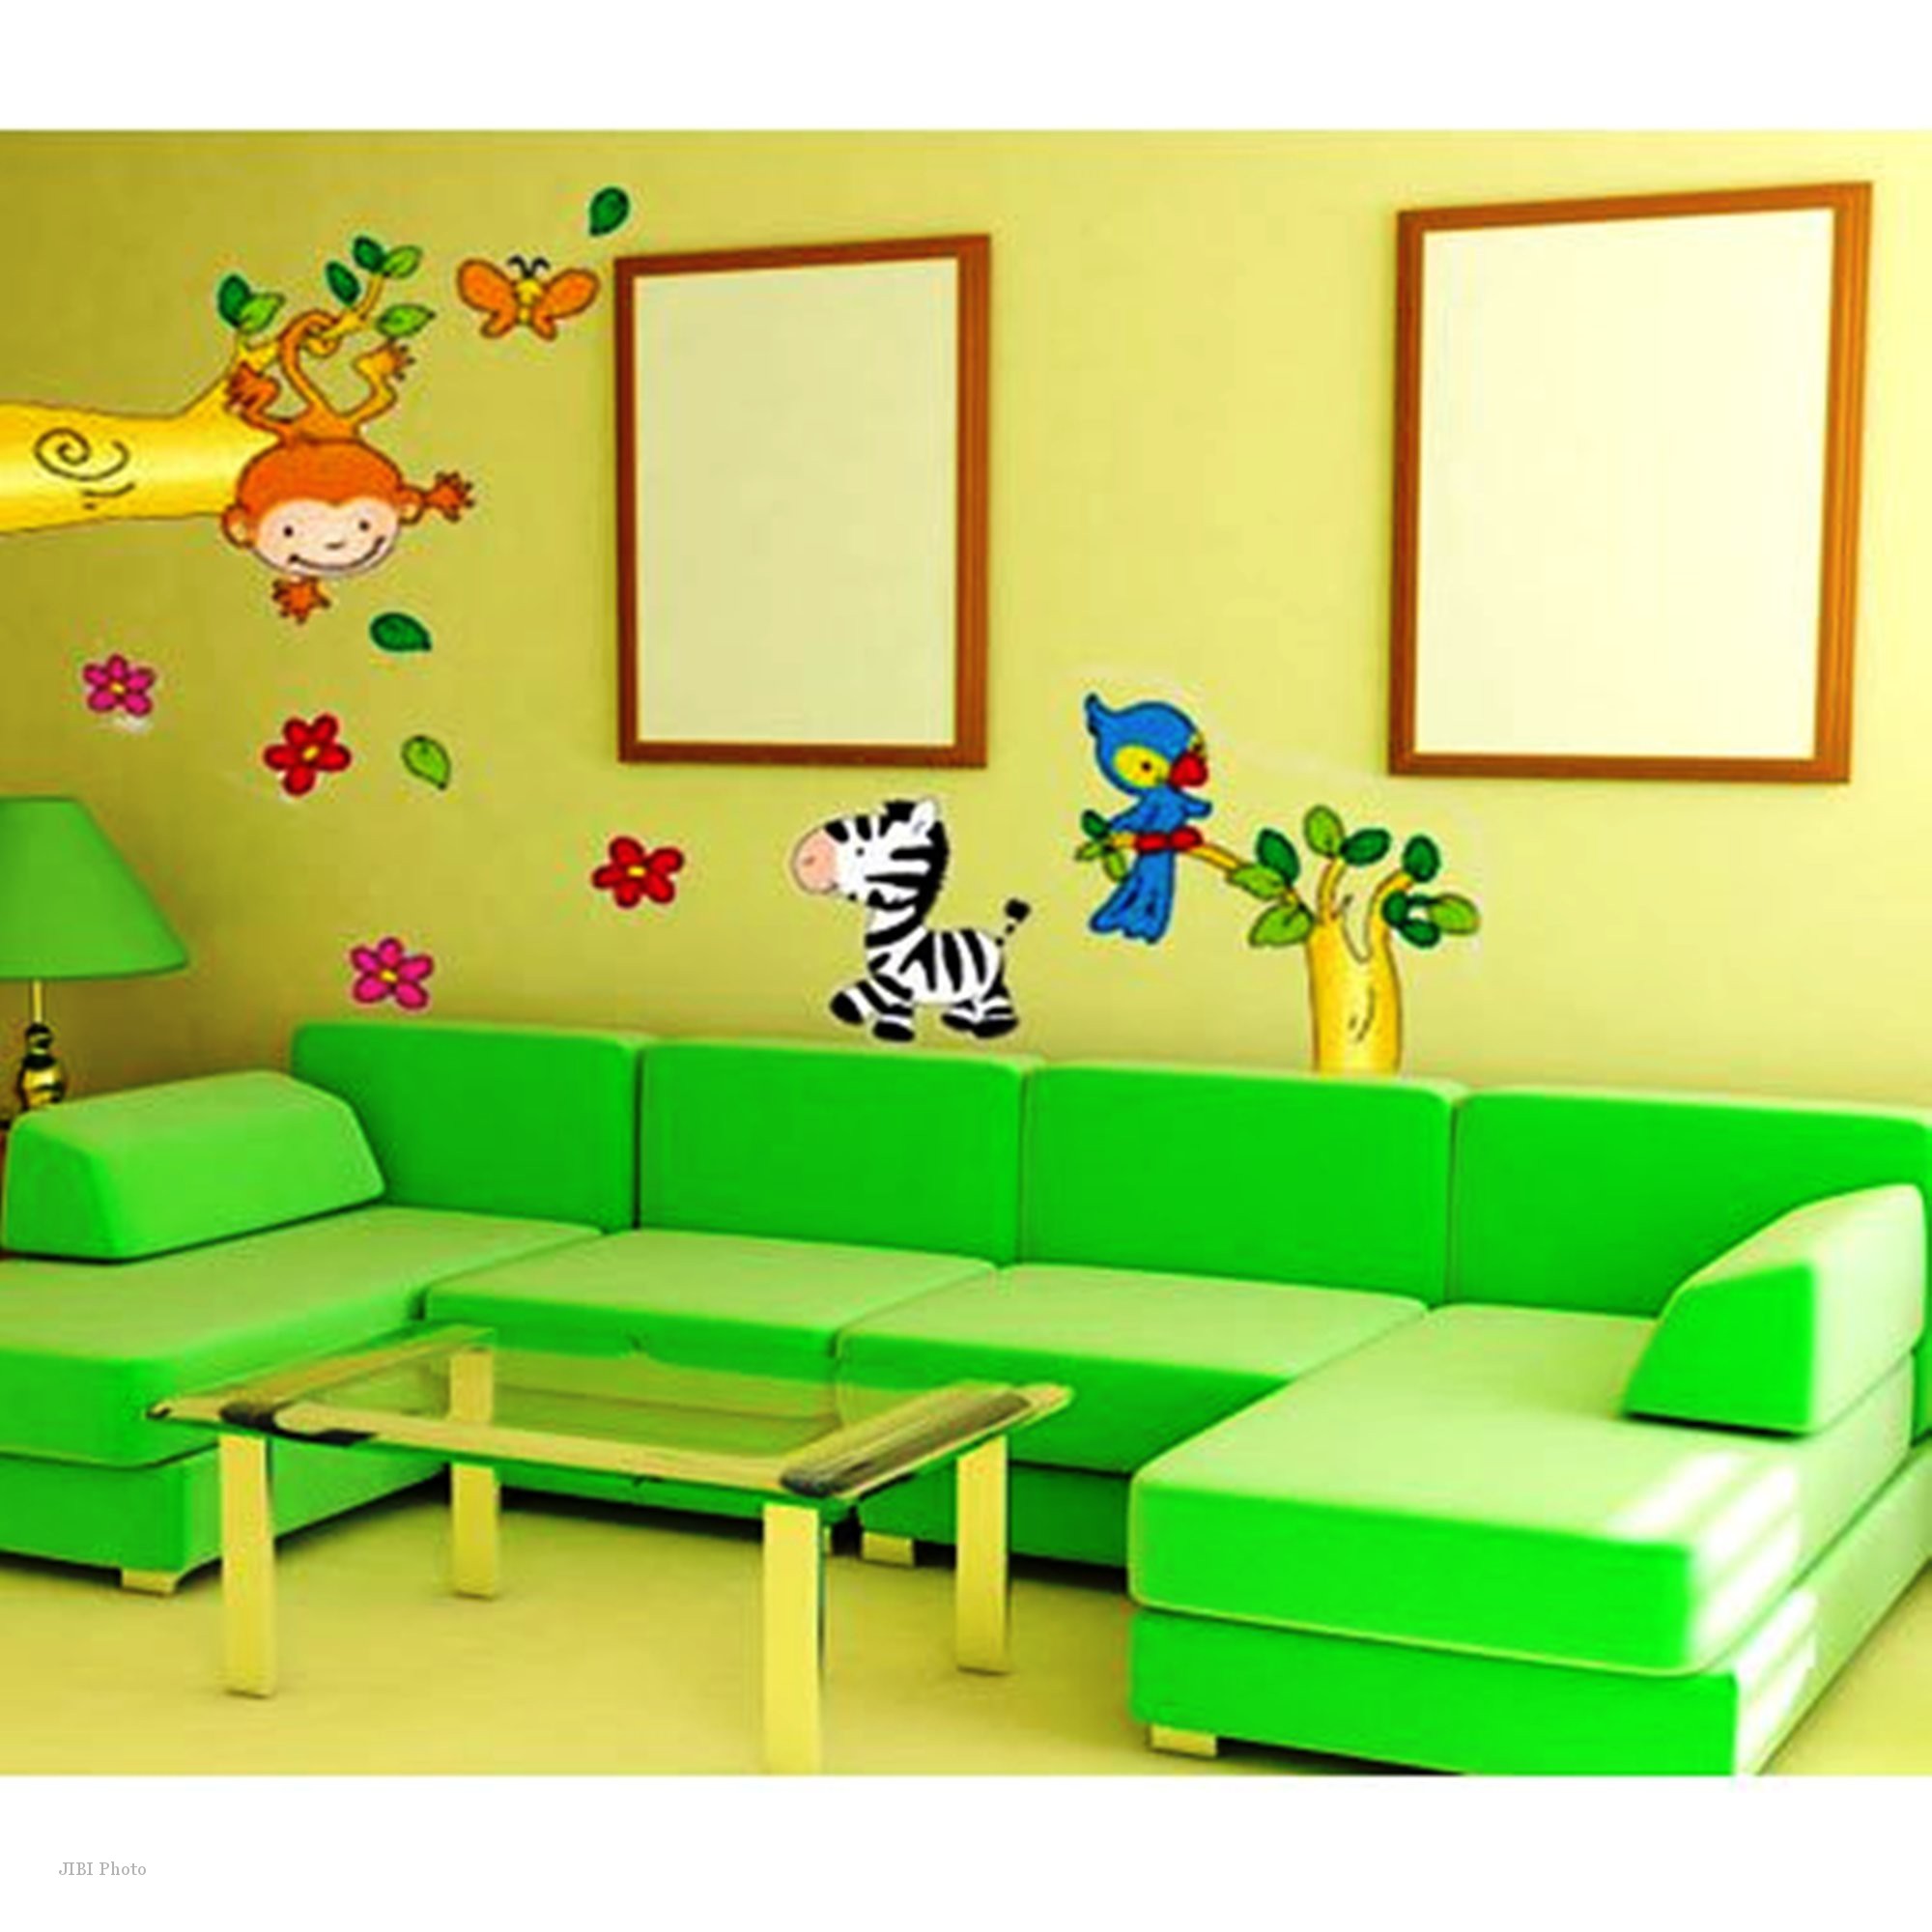 contoh gambar wallpaper,green,furniture,room,yellow,table